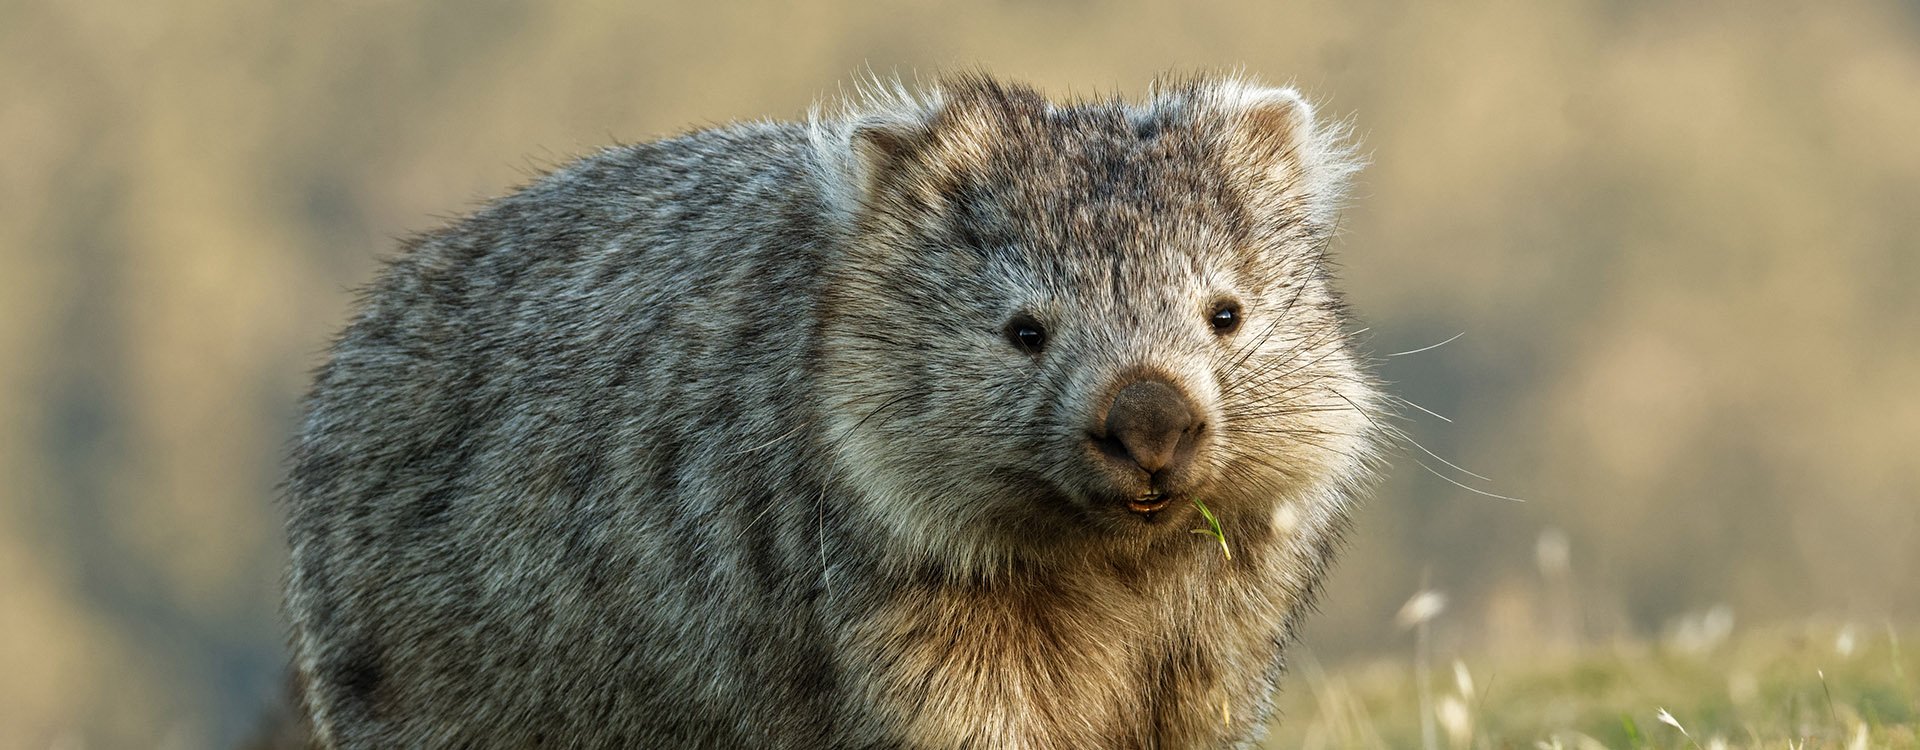 Wombat in the Tasmanian scenery, eating grass in the evening on the island near Tasmania